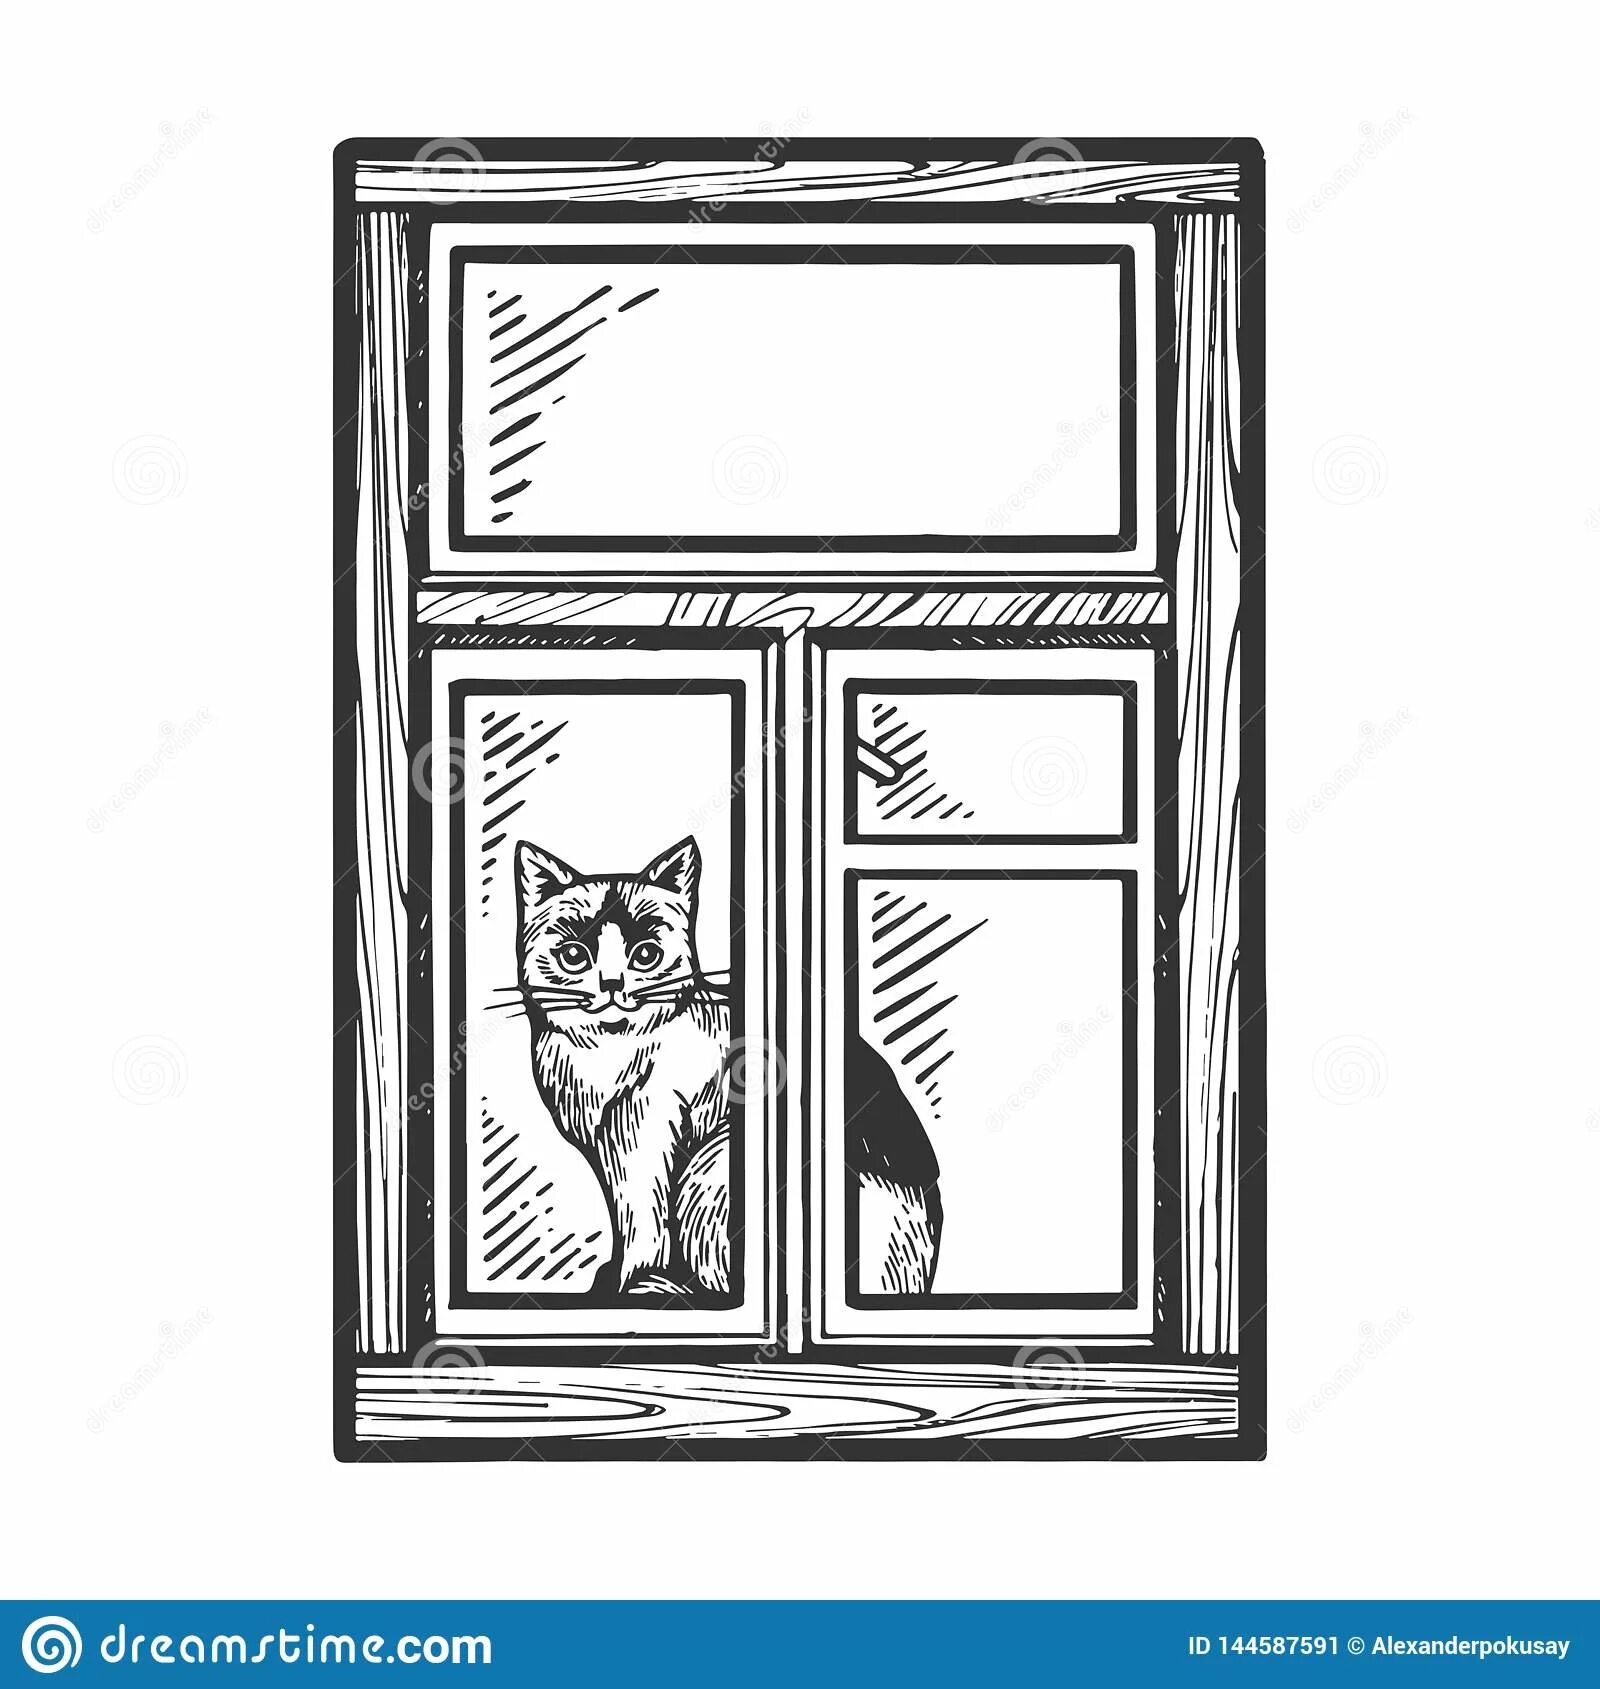 Cat on window #9